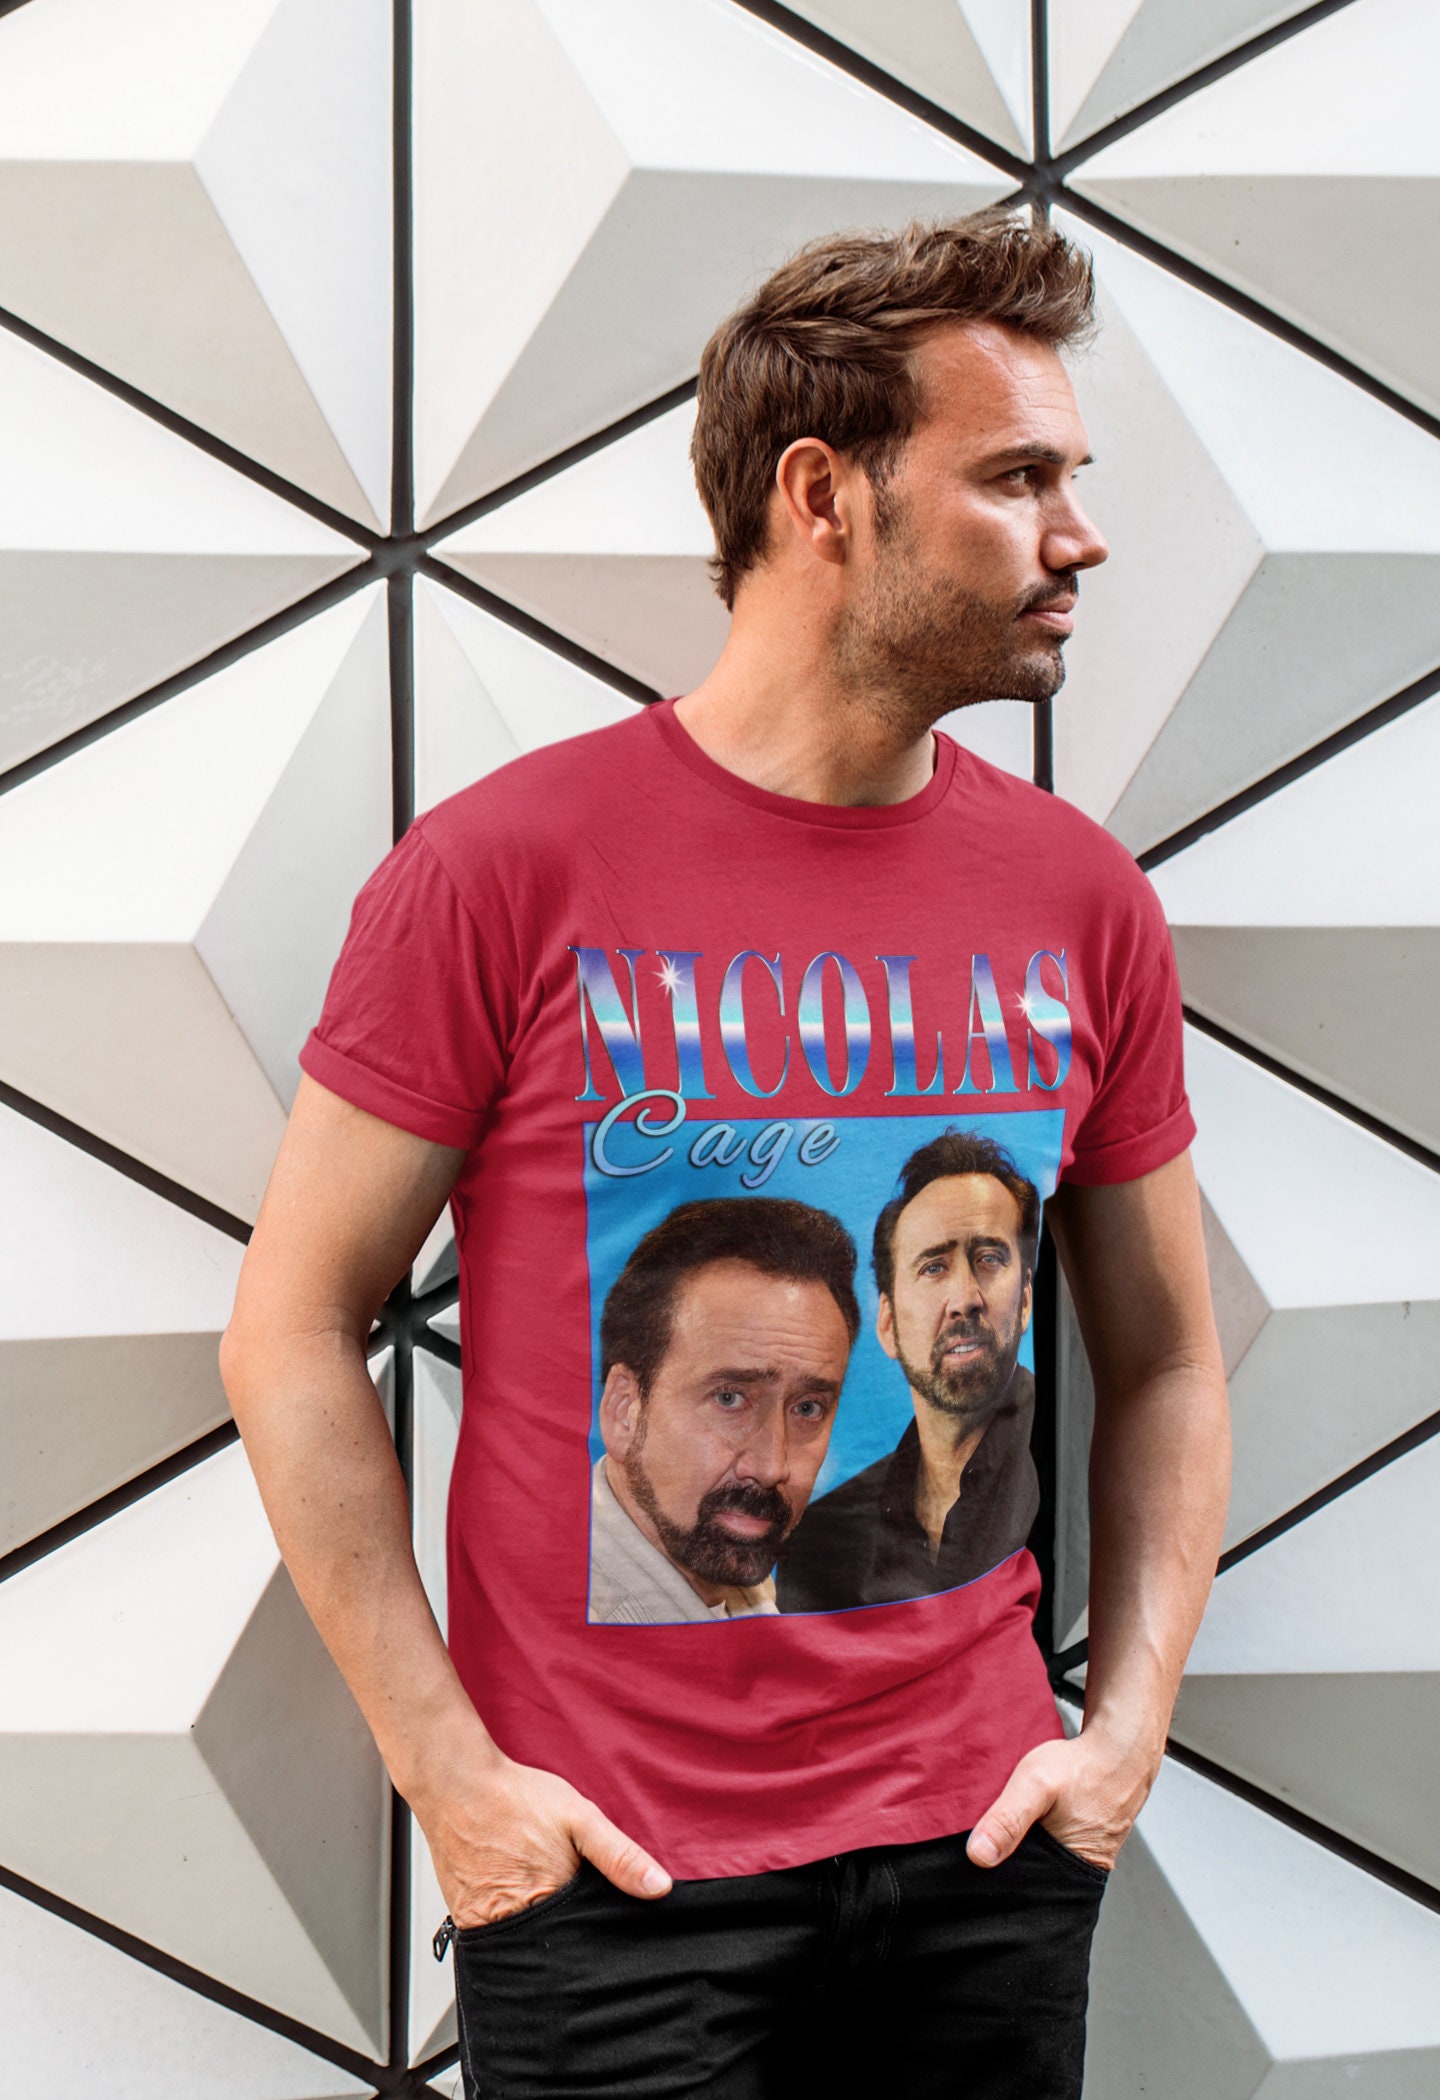 Nicolas Cage Celebrity Tee Vintage Unisex T-Shirt